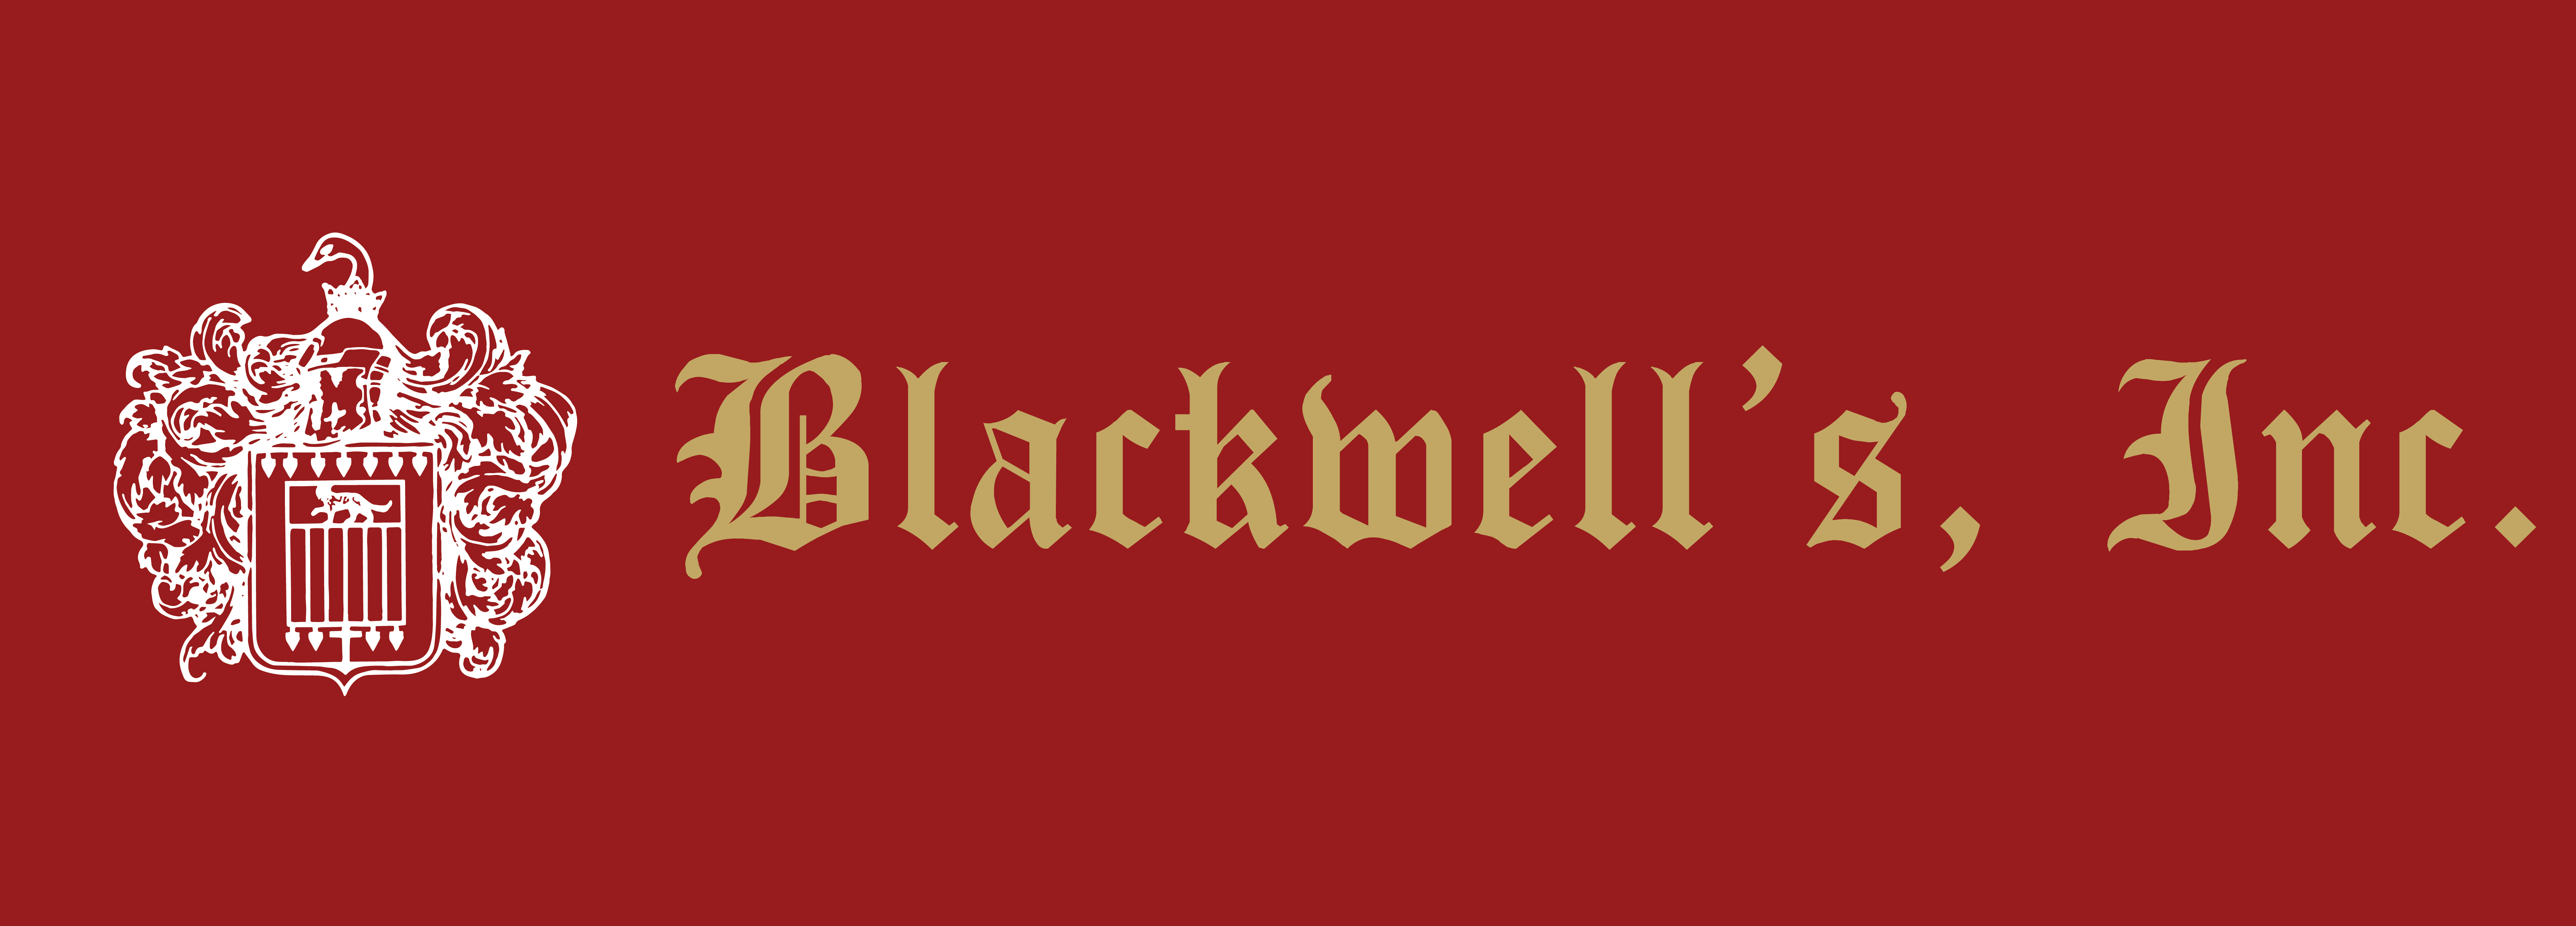 blackwell's, inc. logo